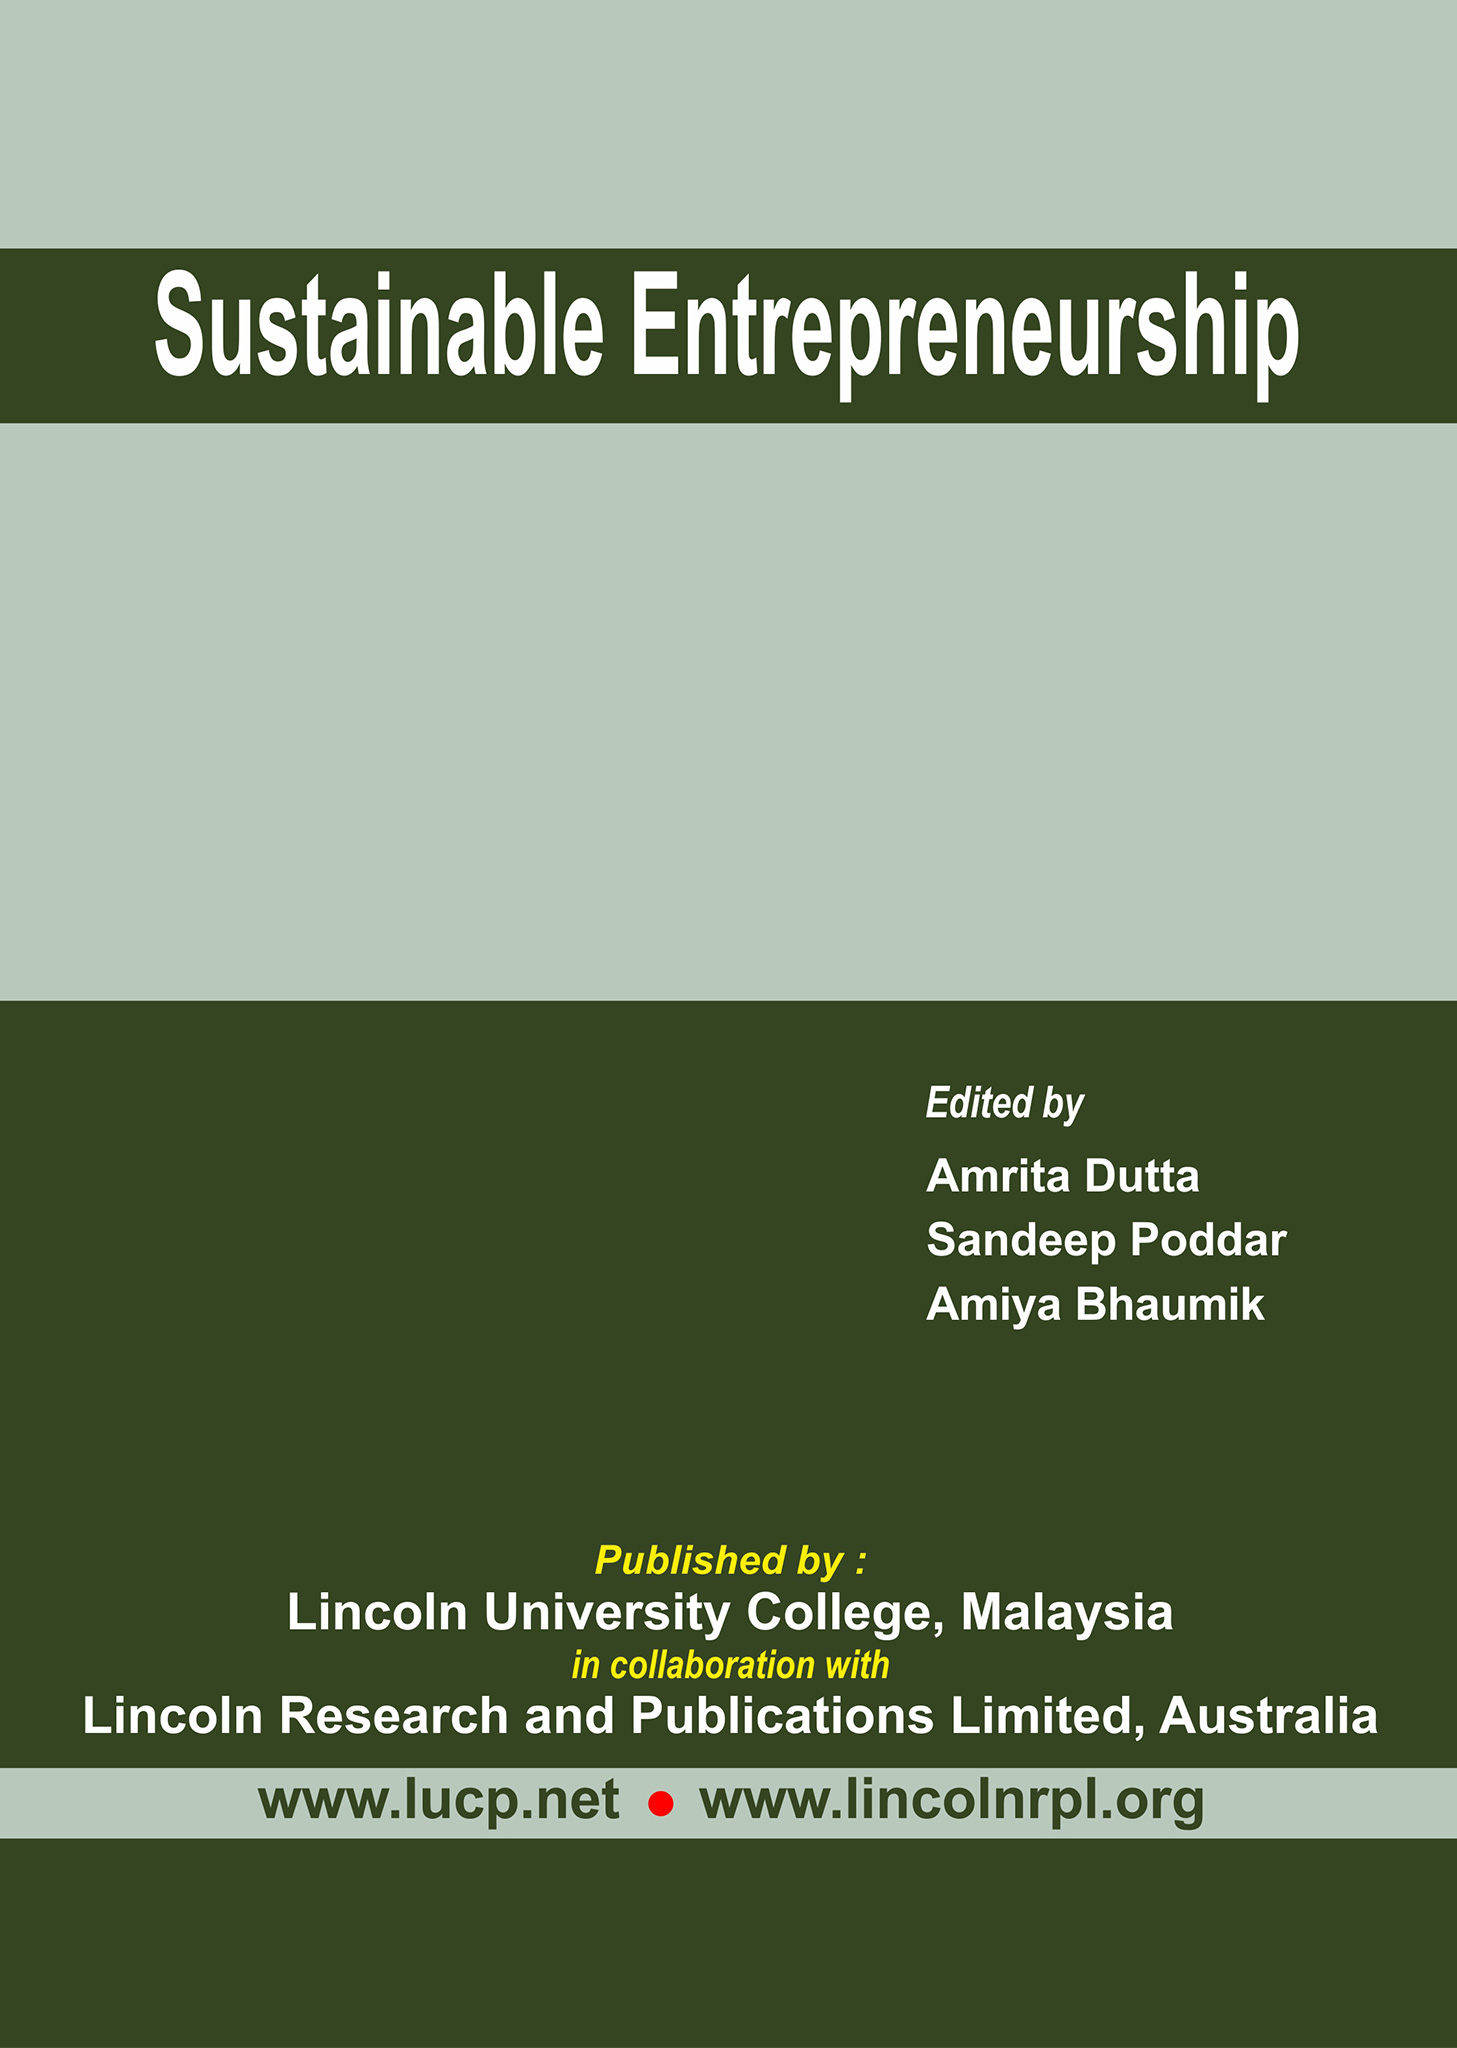 Sustainable-Entrepreneurship-cover